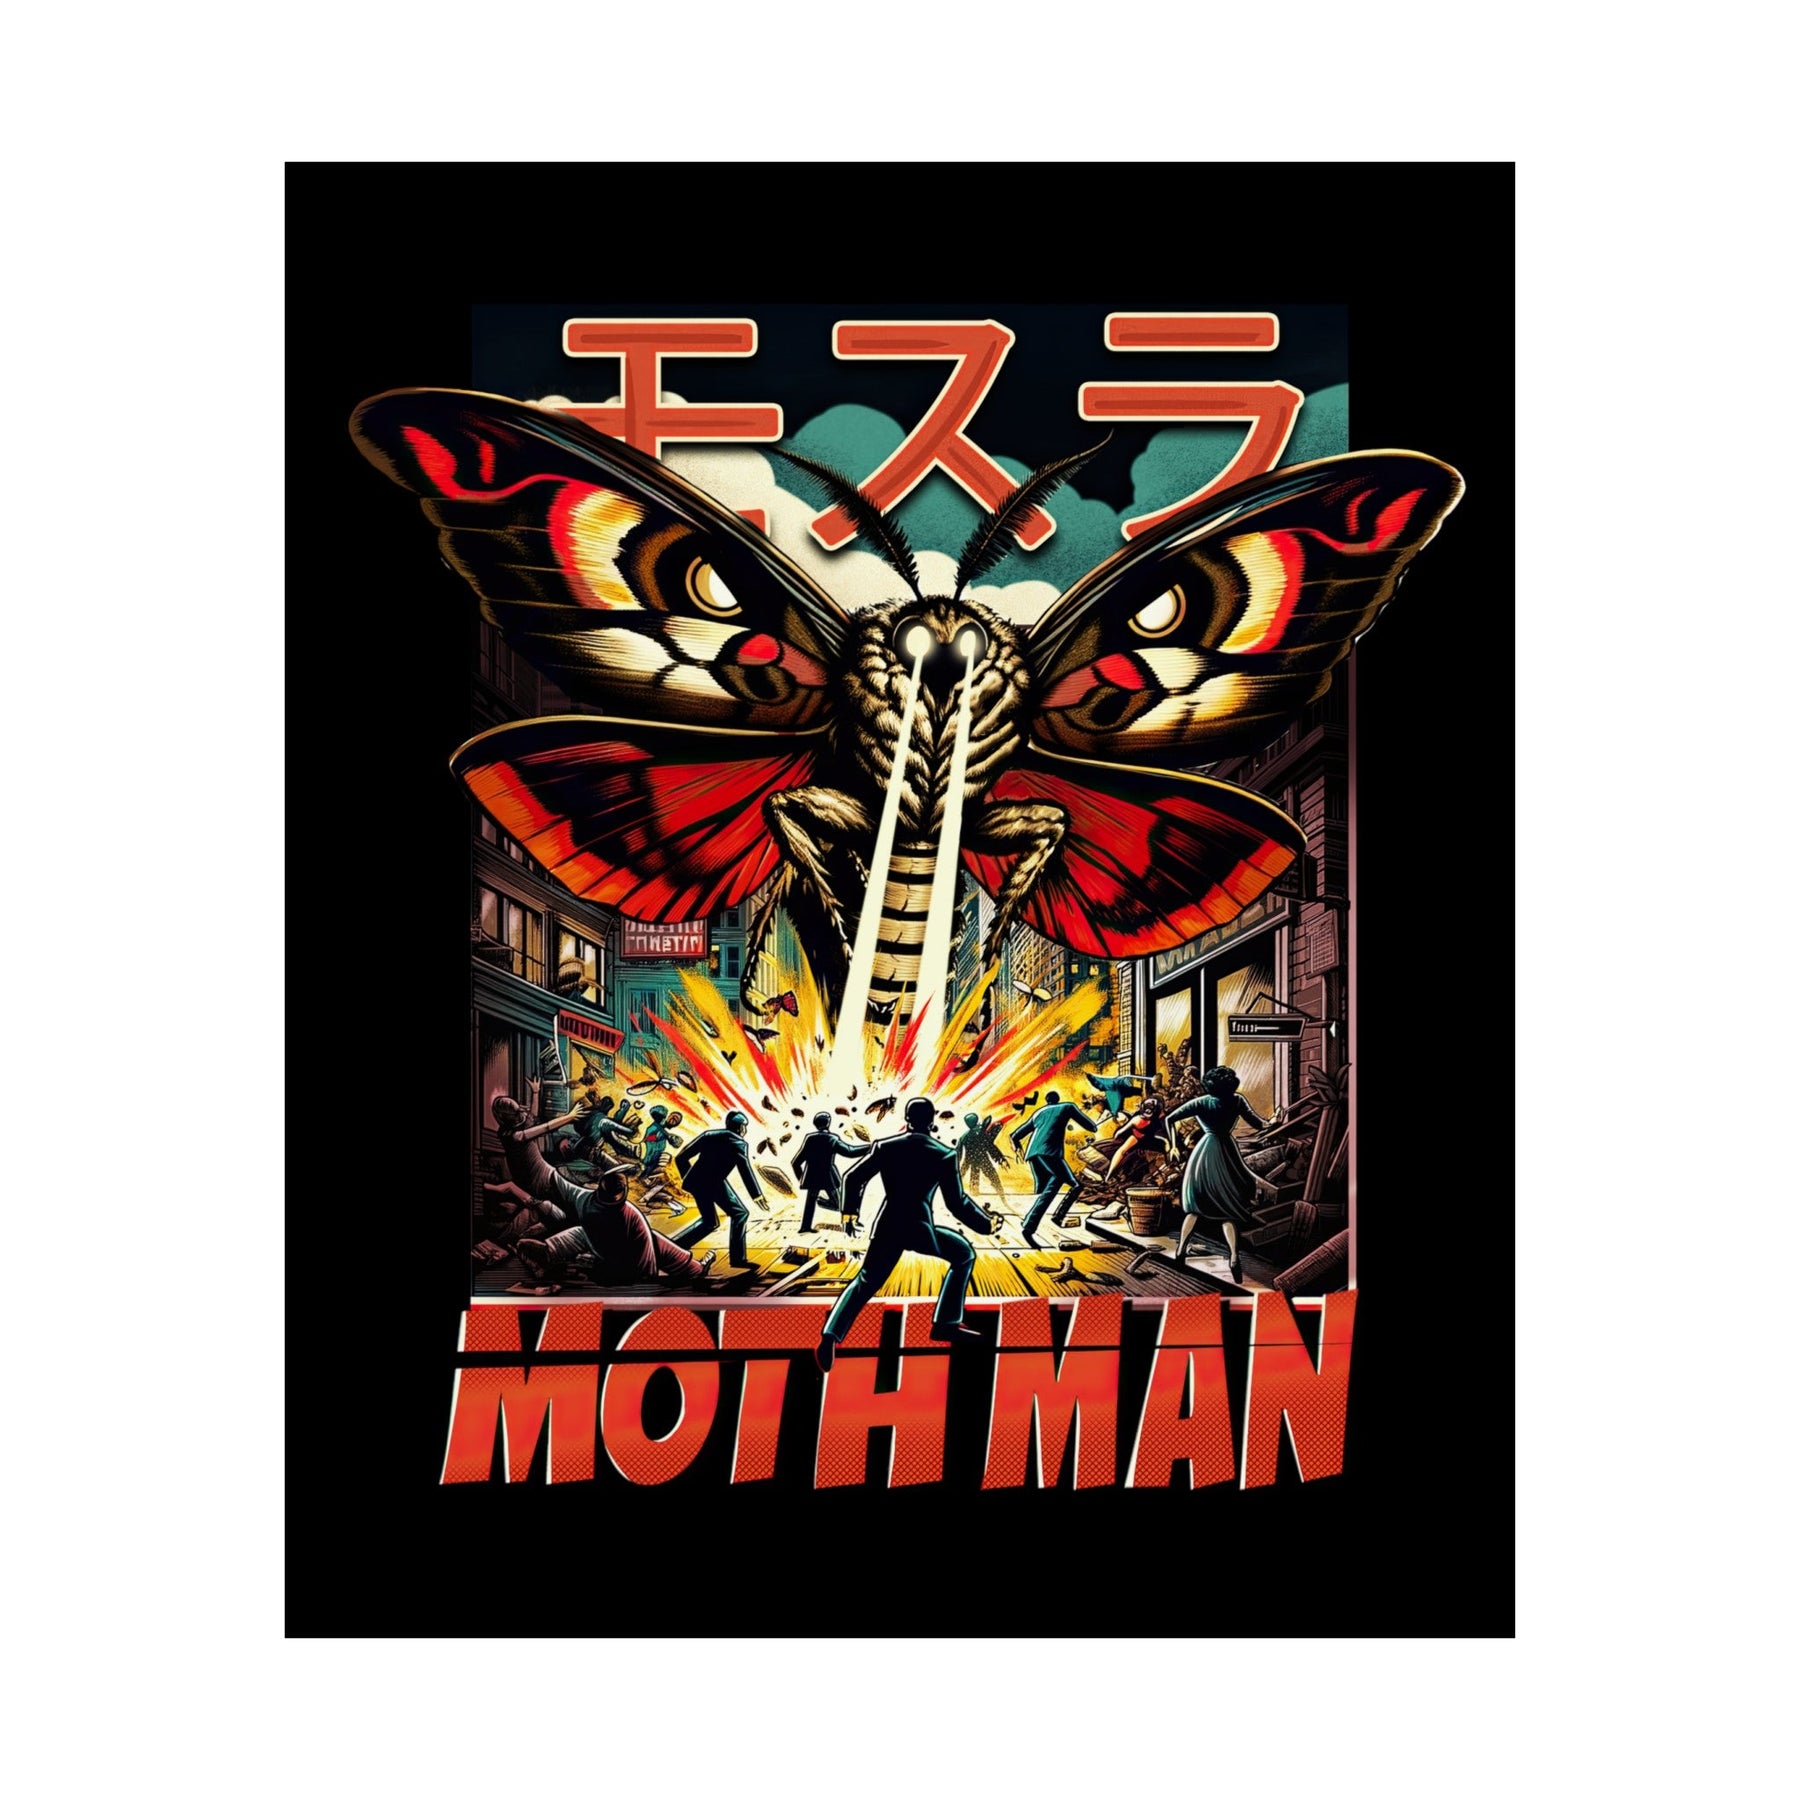 Mothman Attack Comic Style Art Print - Goth Cloth Co.Poster83331987927550868327